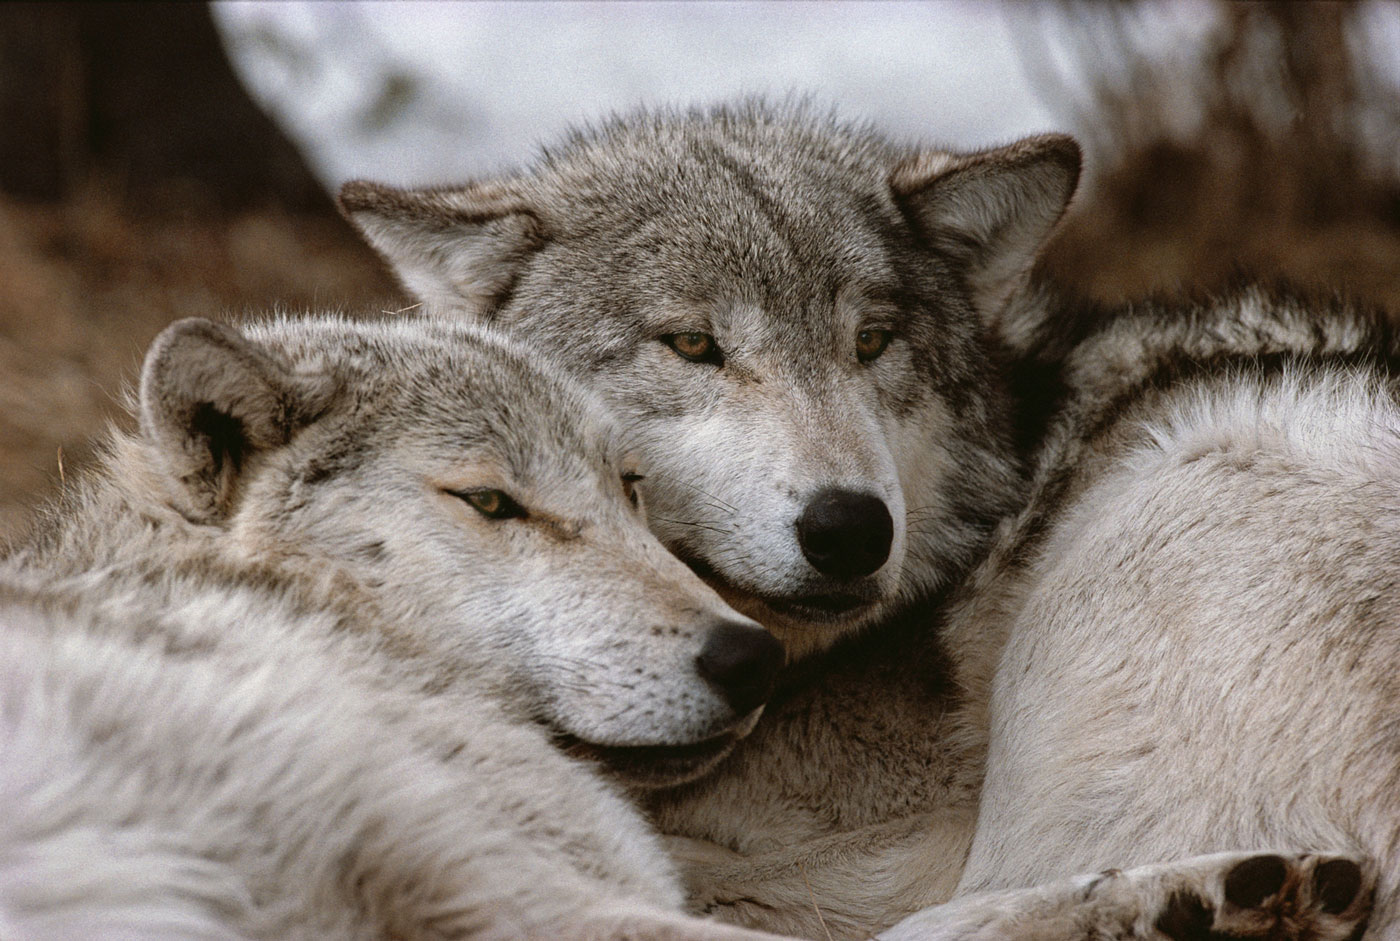 Pair Bonding in the Animal Kingdom – Marriage